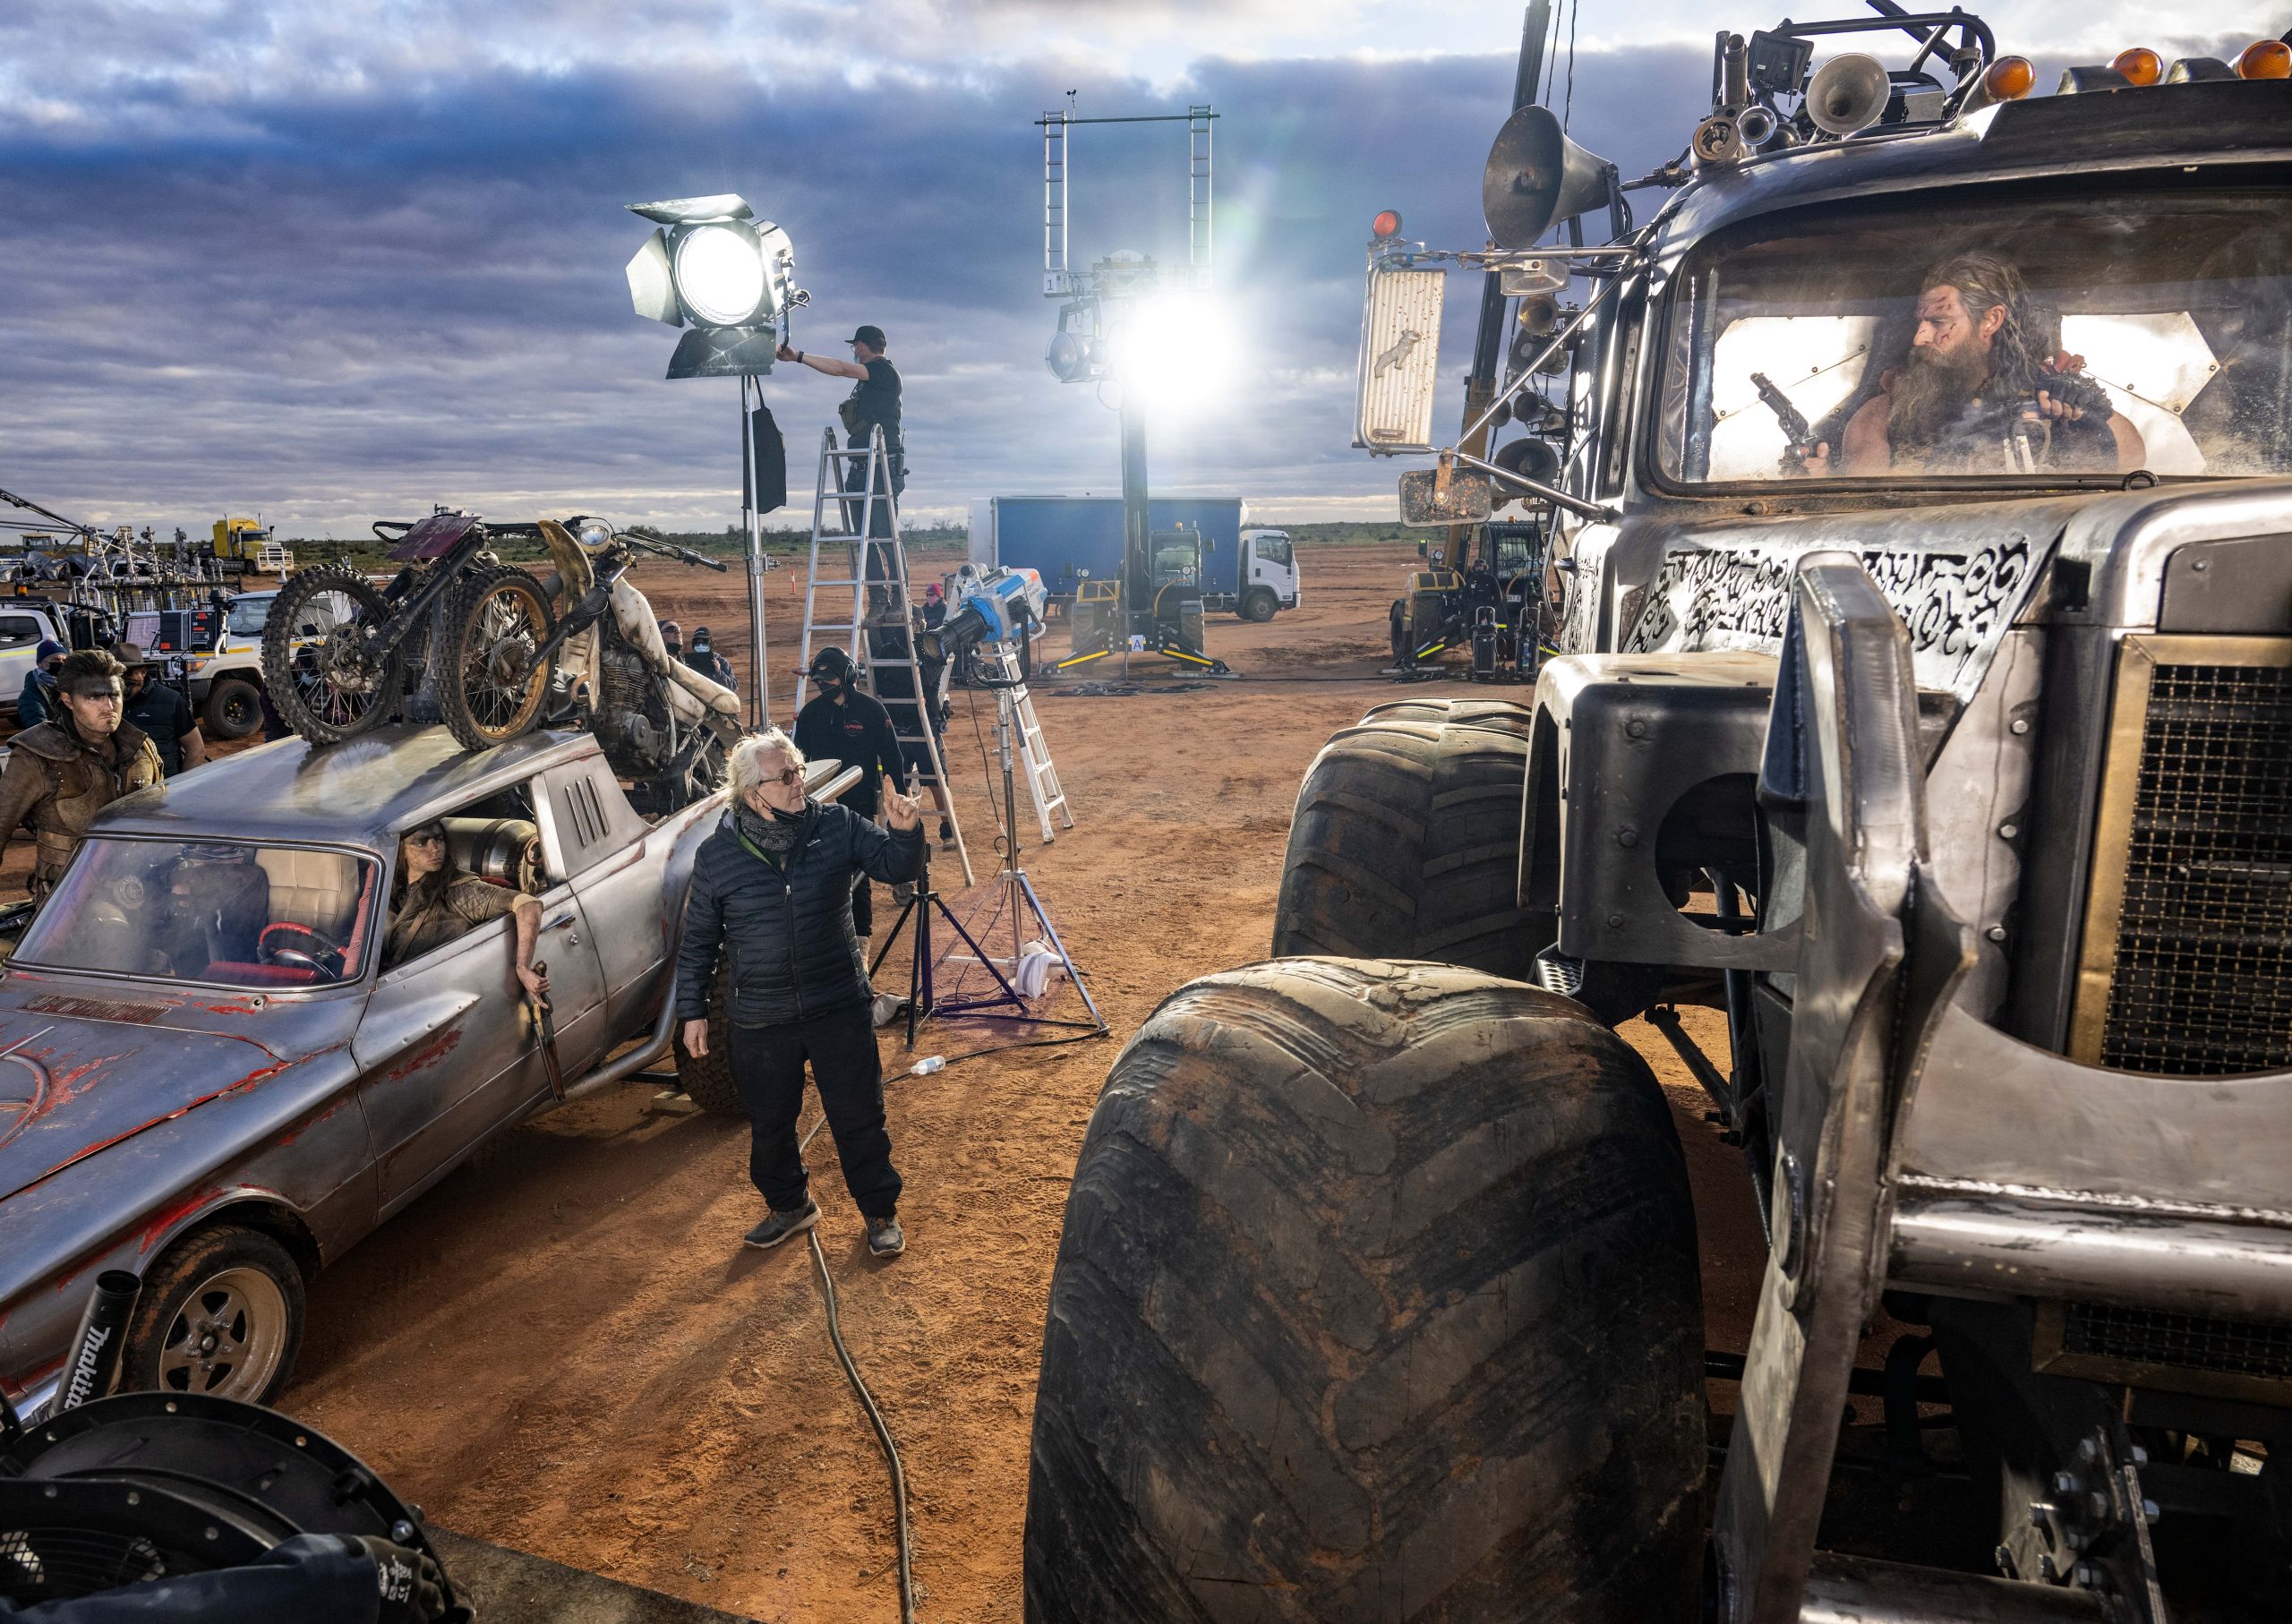 Director George Miller on the set of Furiosa: A Mad Max Saga with Chris Hemsworth filmed at Broken Hill. Image courtesy of Warner Bros